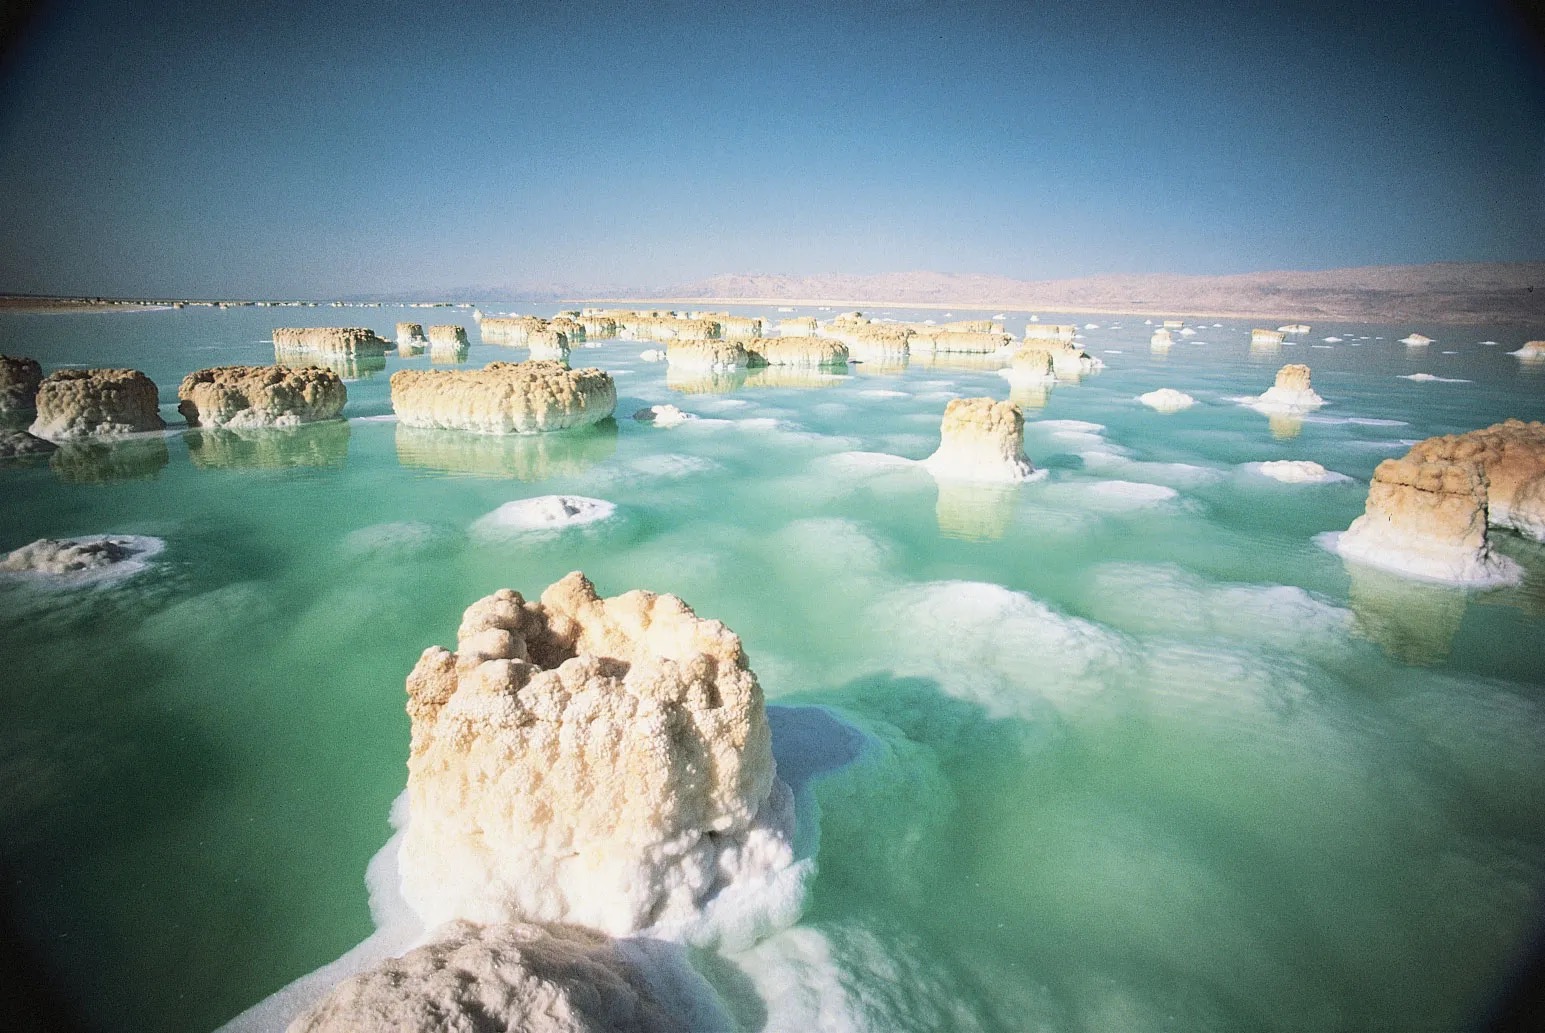 D In Geography Quiz Dead Sea